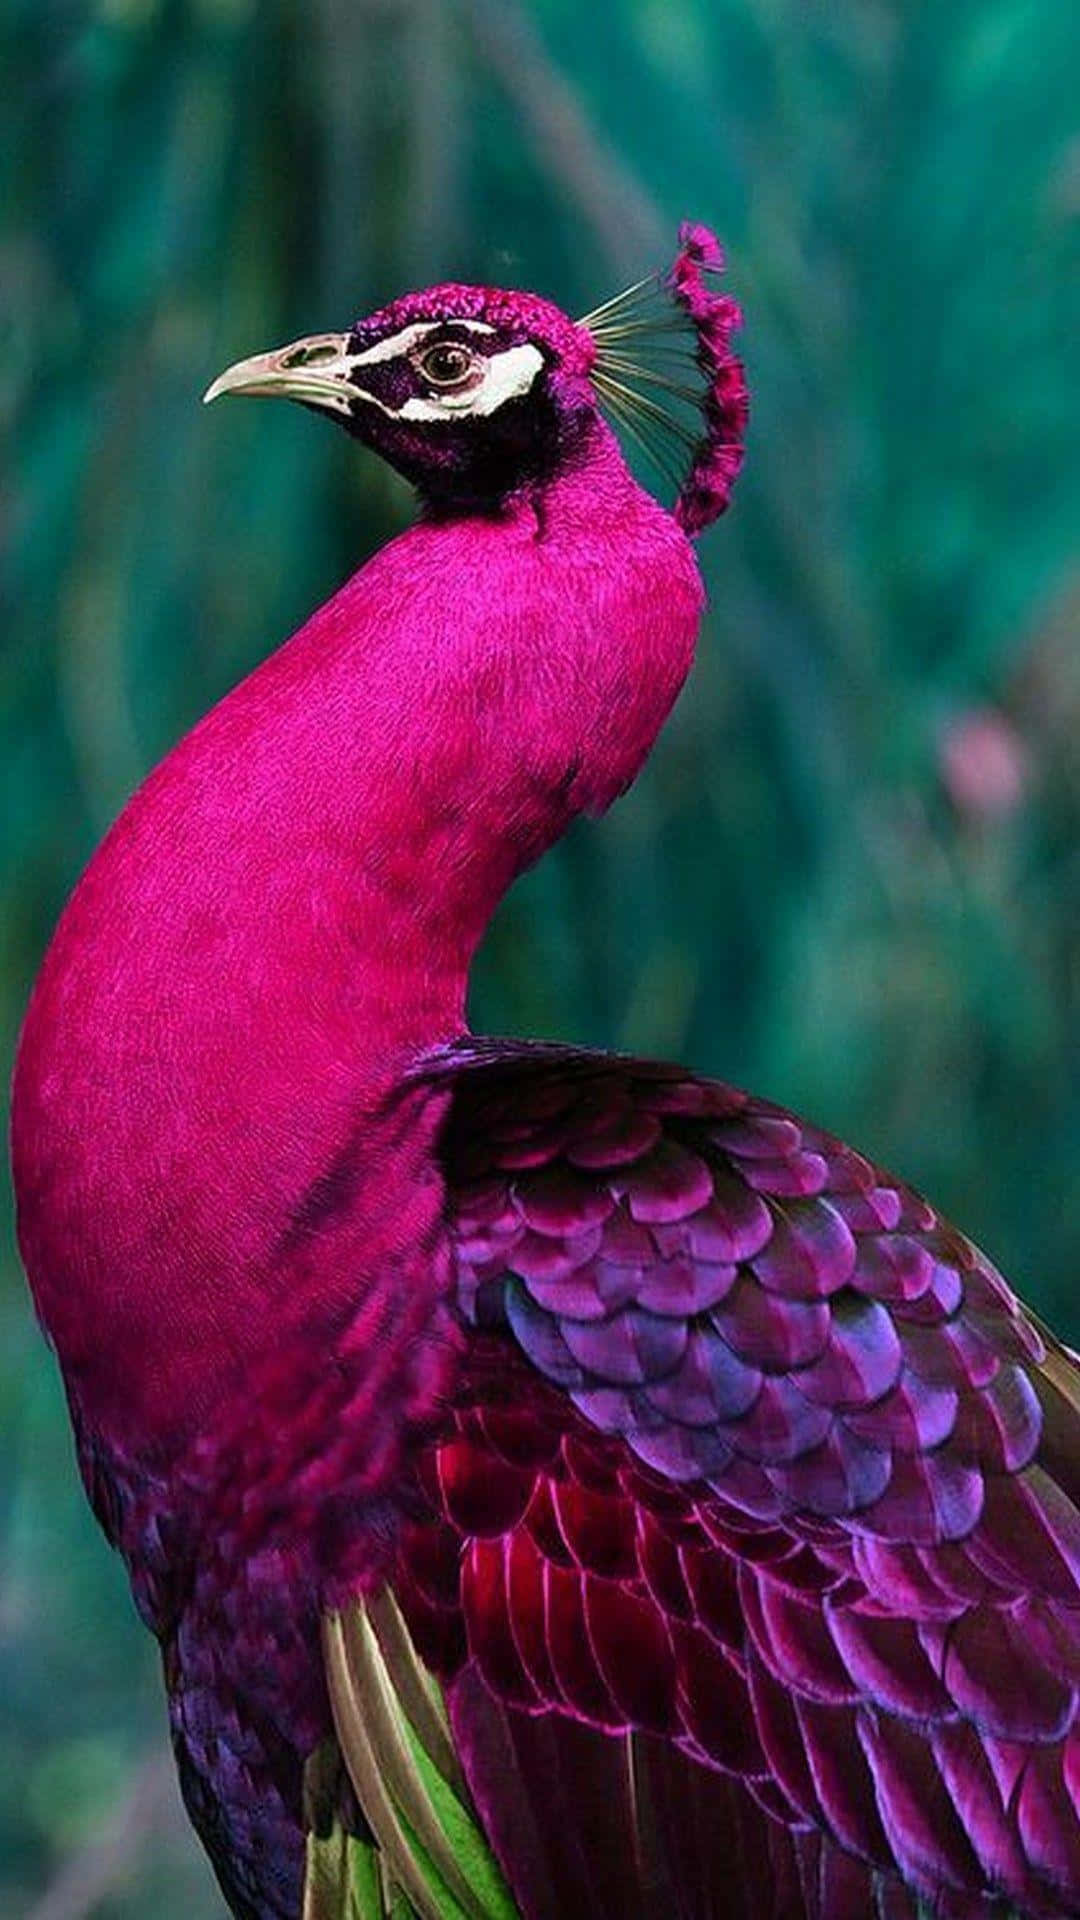 Majestic Peacock Showcasing Its Vibrant Plumage